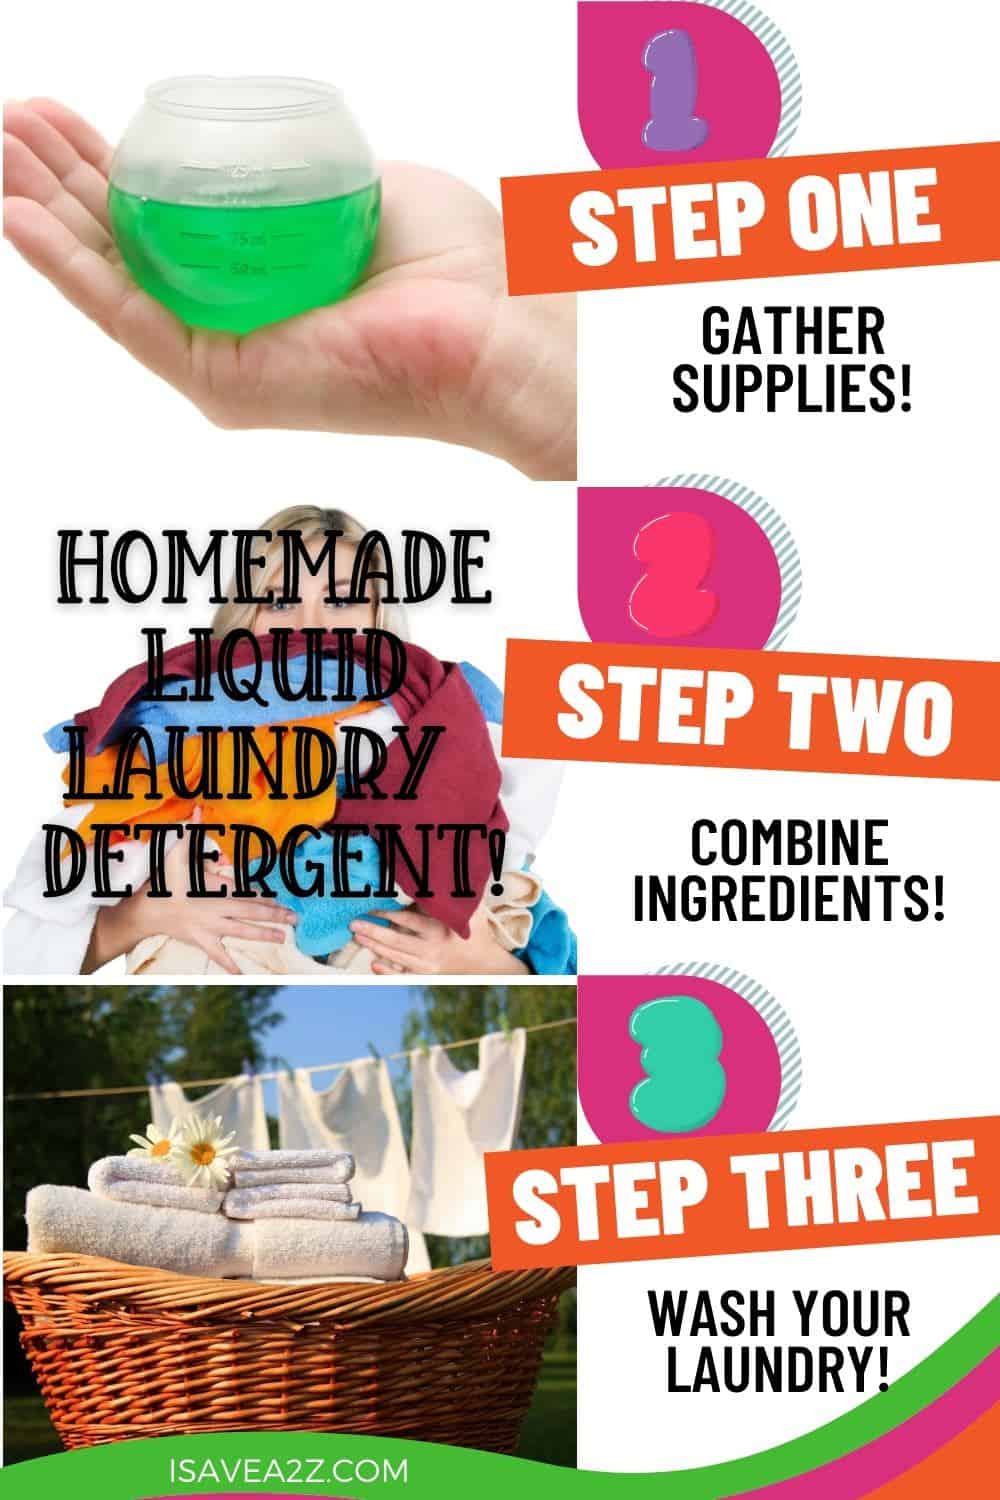 Homemade Liquid Laundry Detergent!